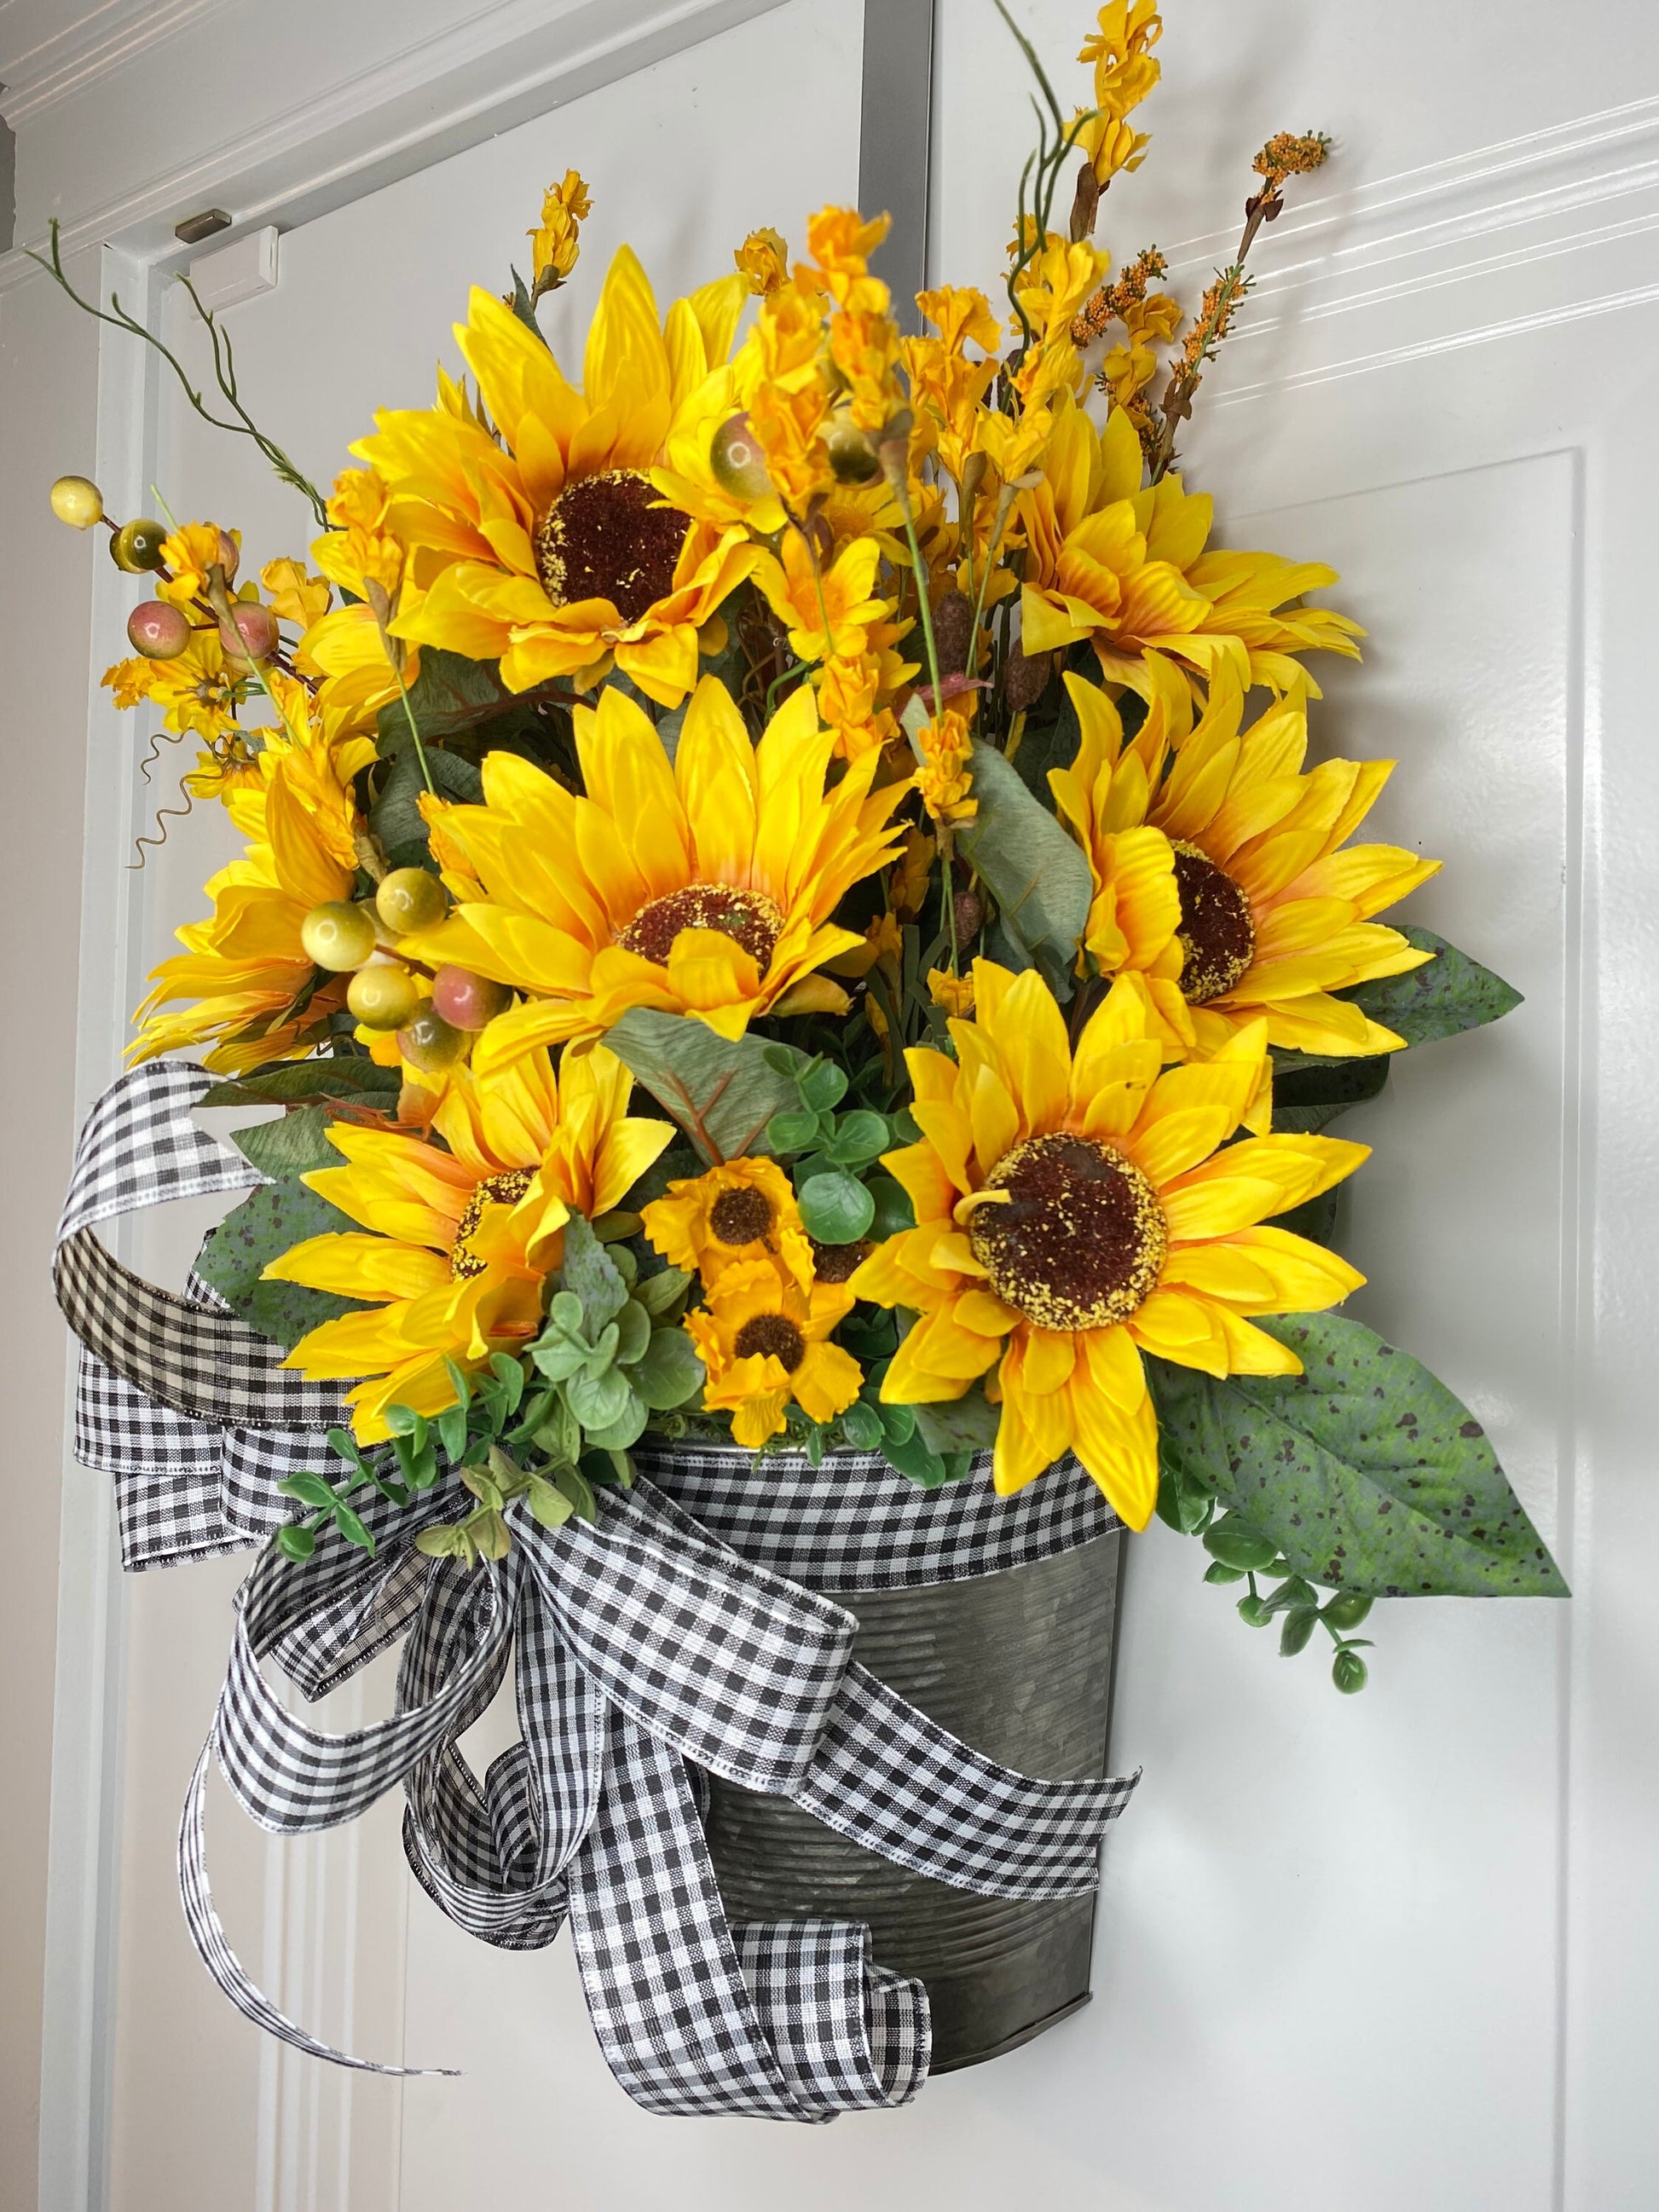 Sunflower Wreath Bucket Floral Arrangement Fall front door decor, apartment farmhouse Decor Door Basket, Housewarming gift for newlyweds